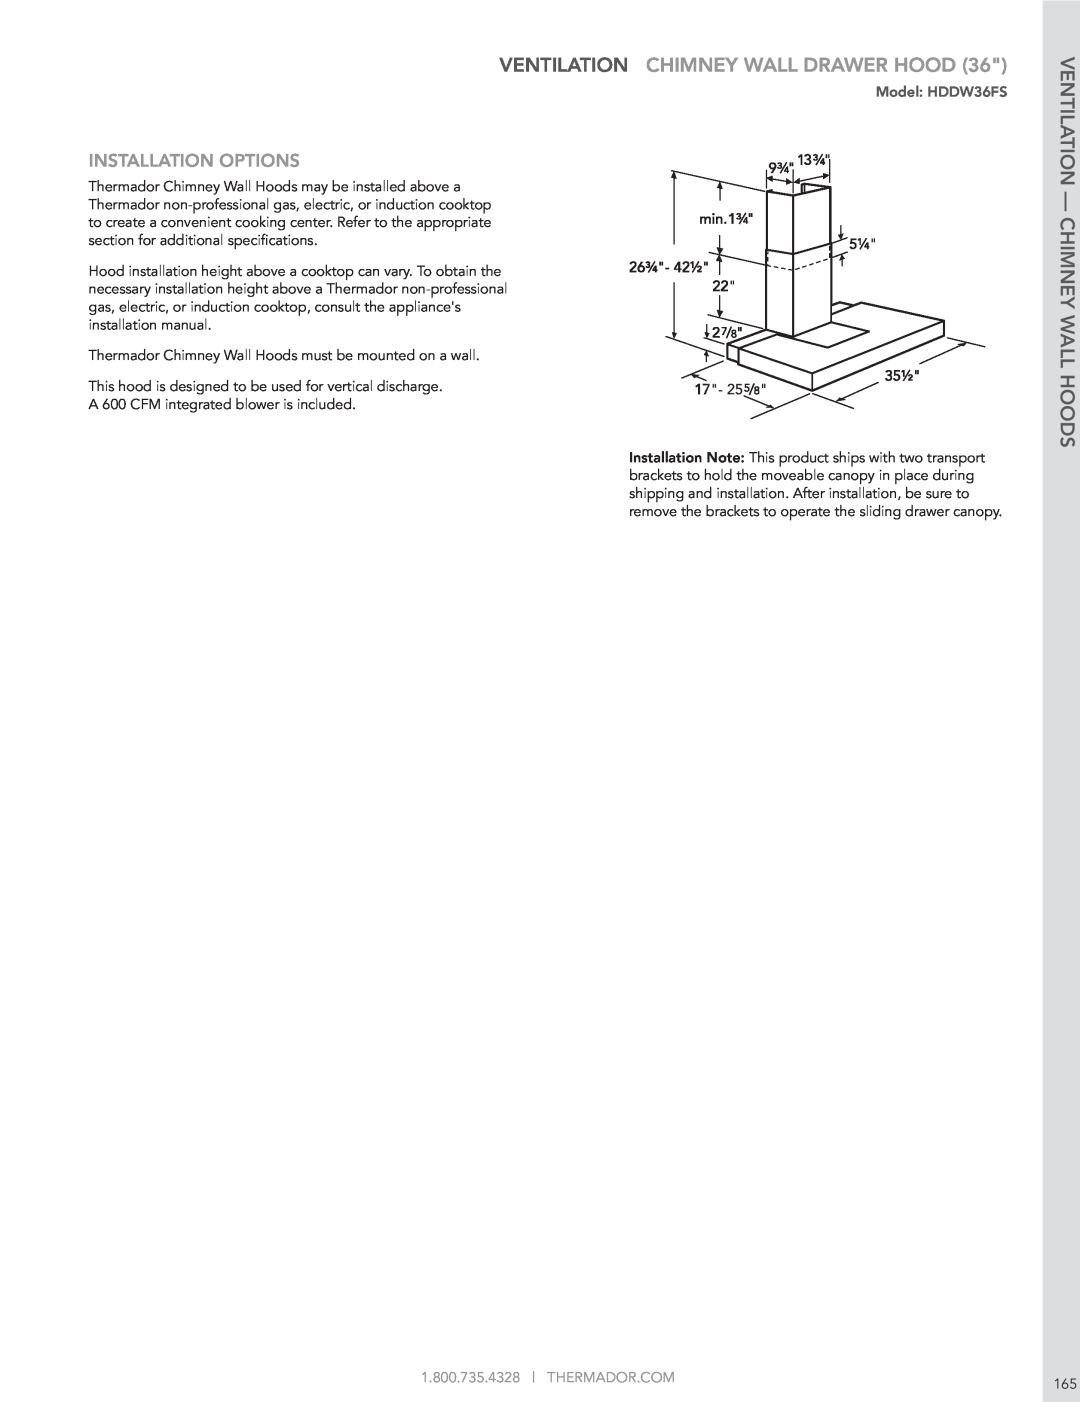 Thermador HMWB36FS manual Ventilation Chimney Wall Drawer Hood, Ventilation - Chimney Wall Hoods, Installation Options 